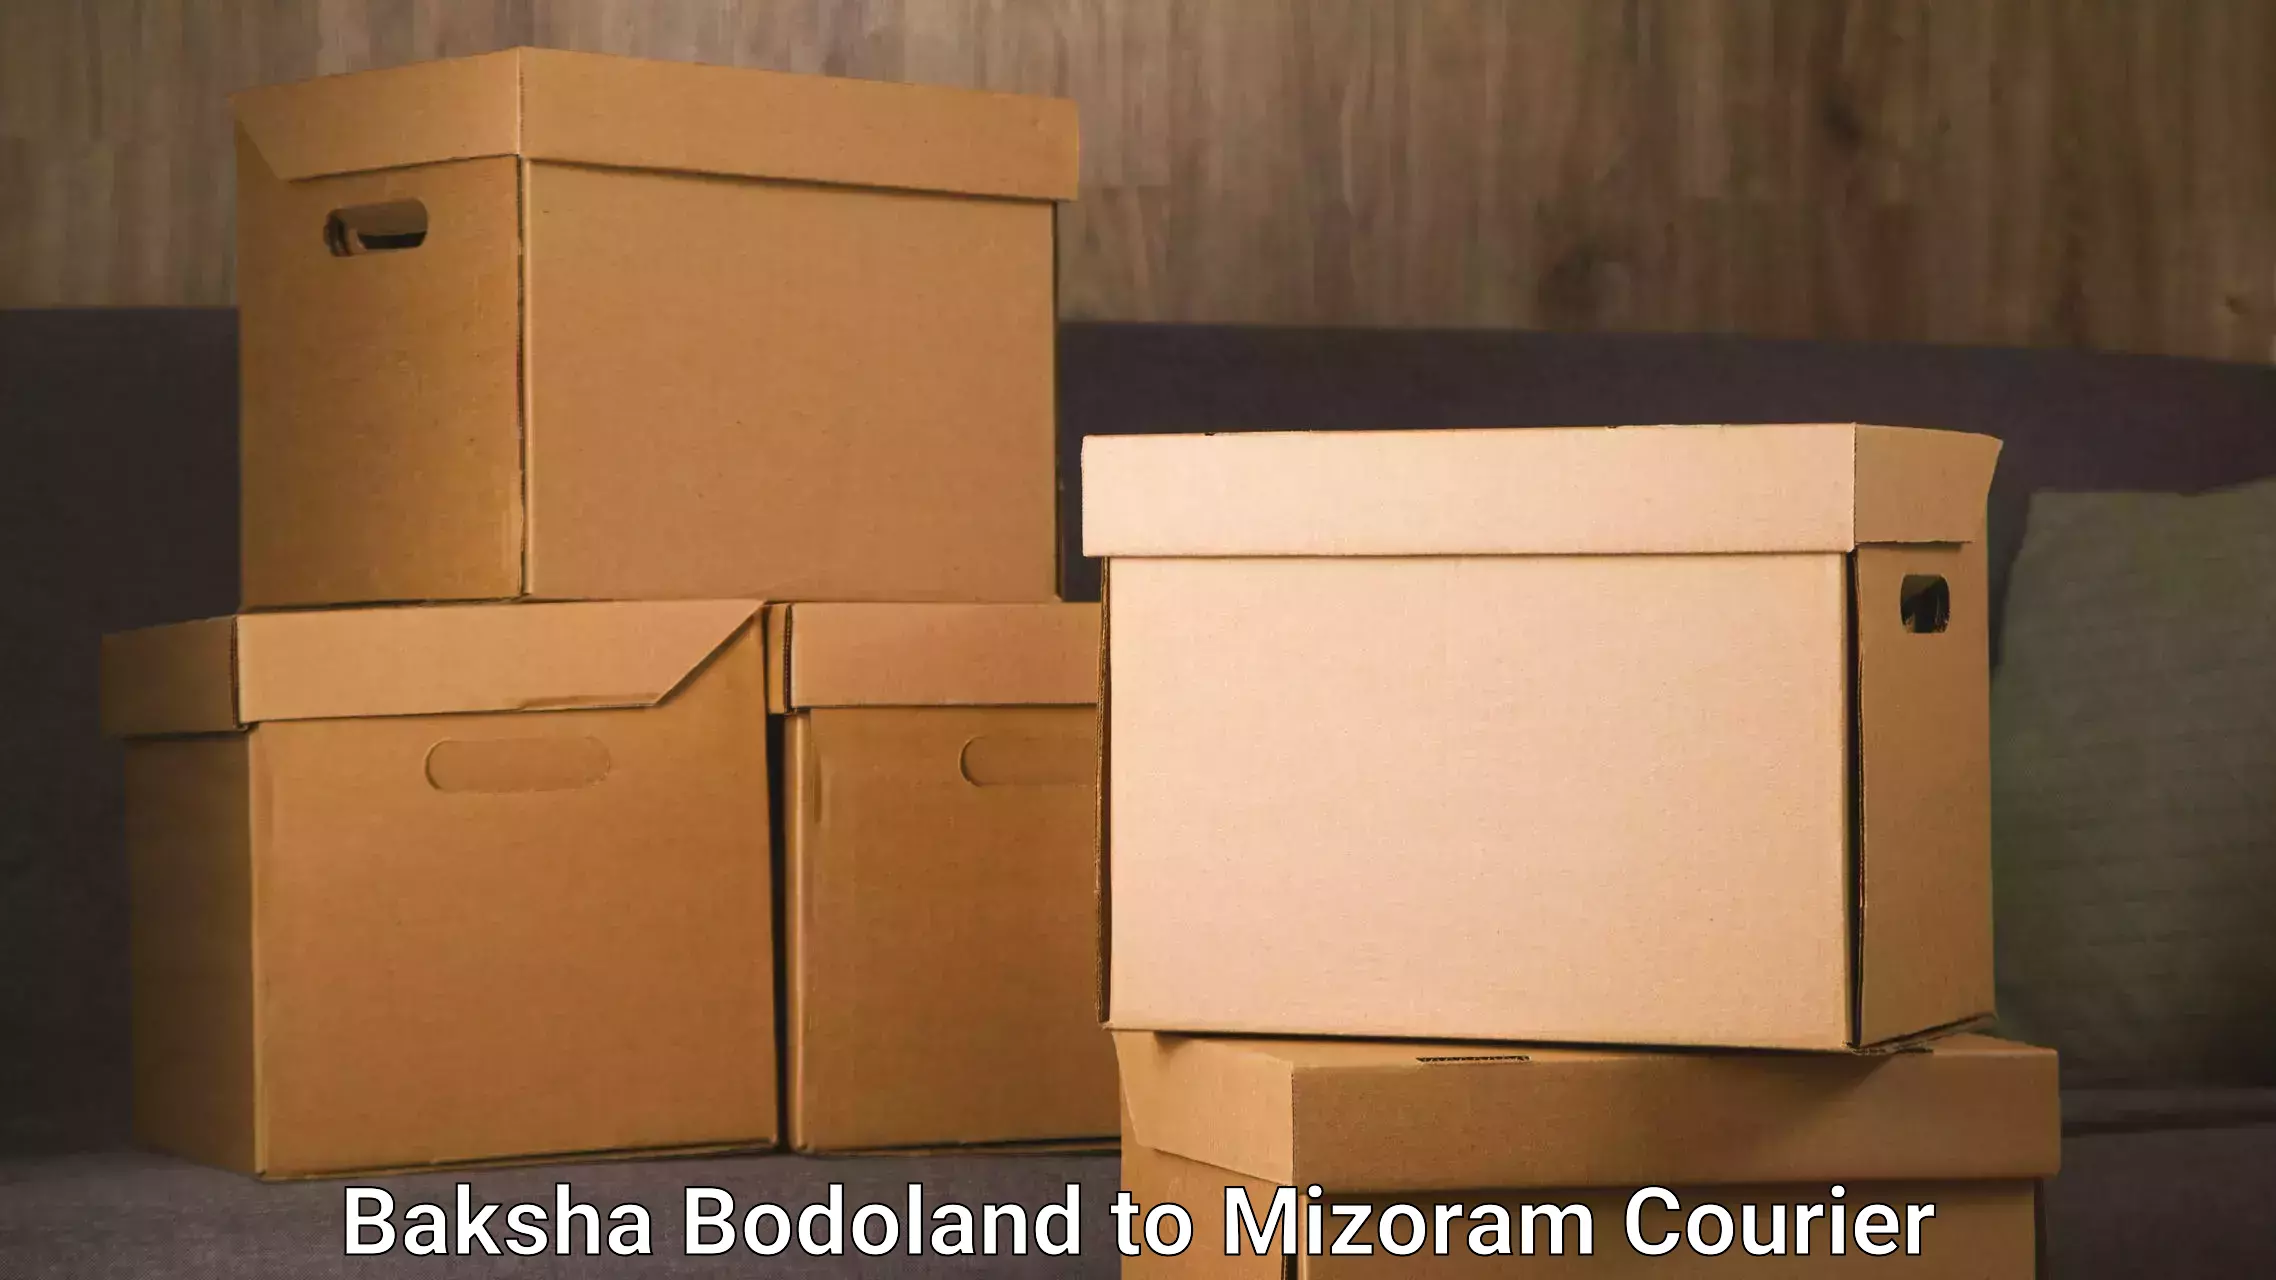 Express delivery network Baksha Bodoland to Mizoram